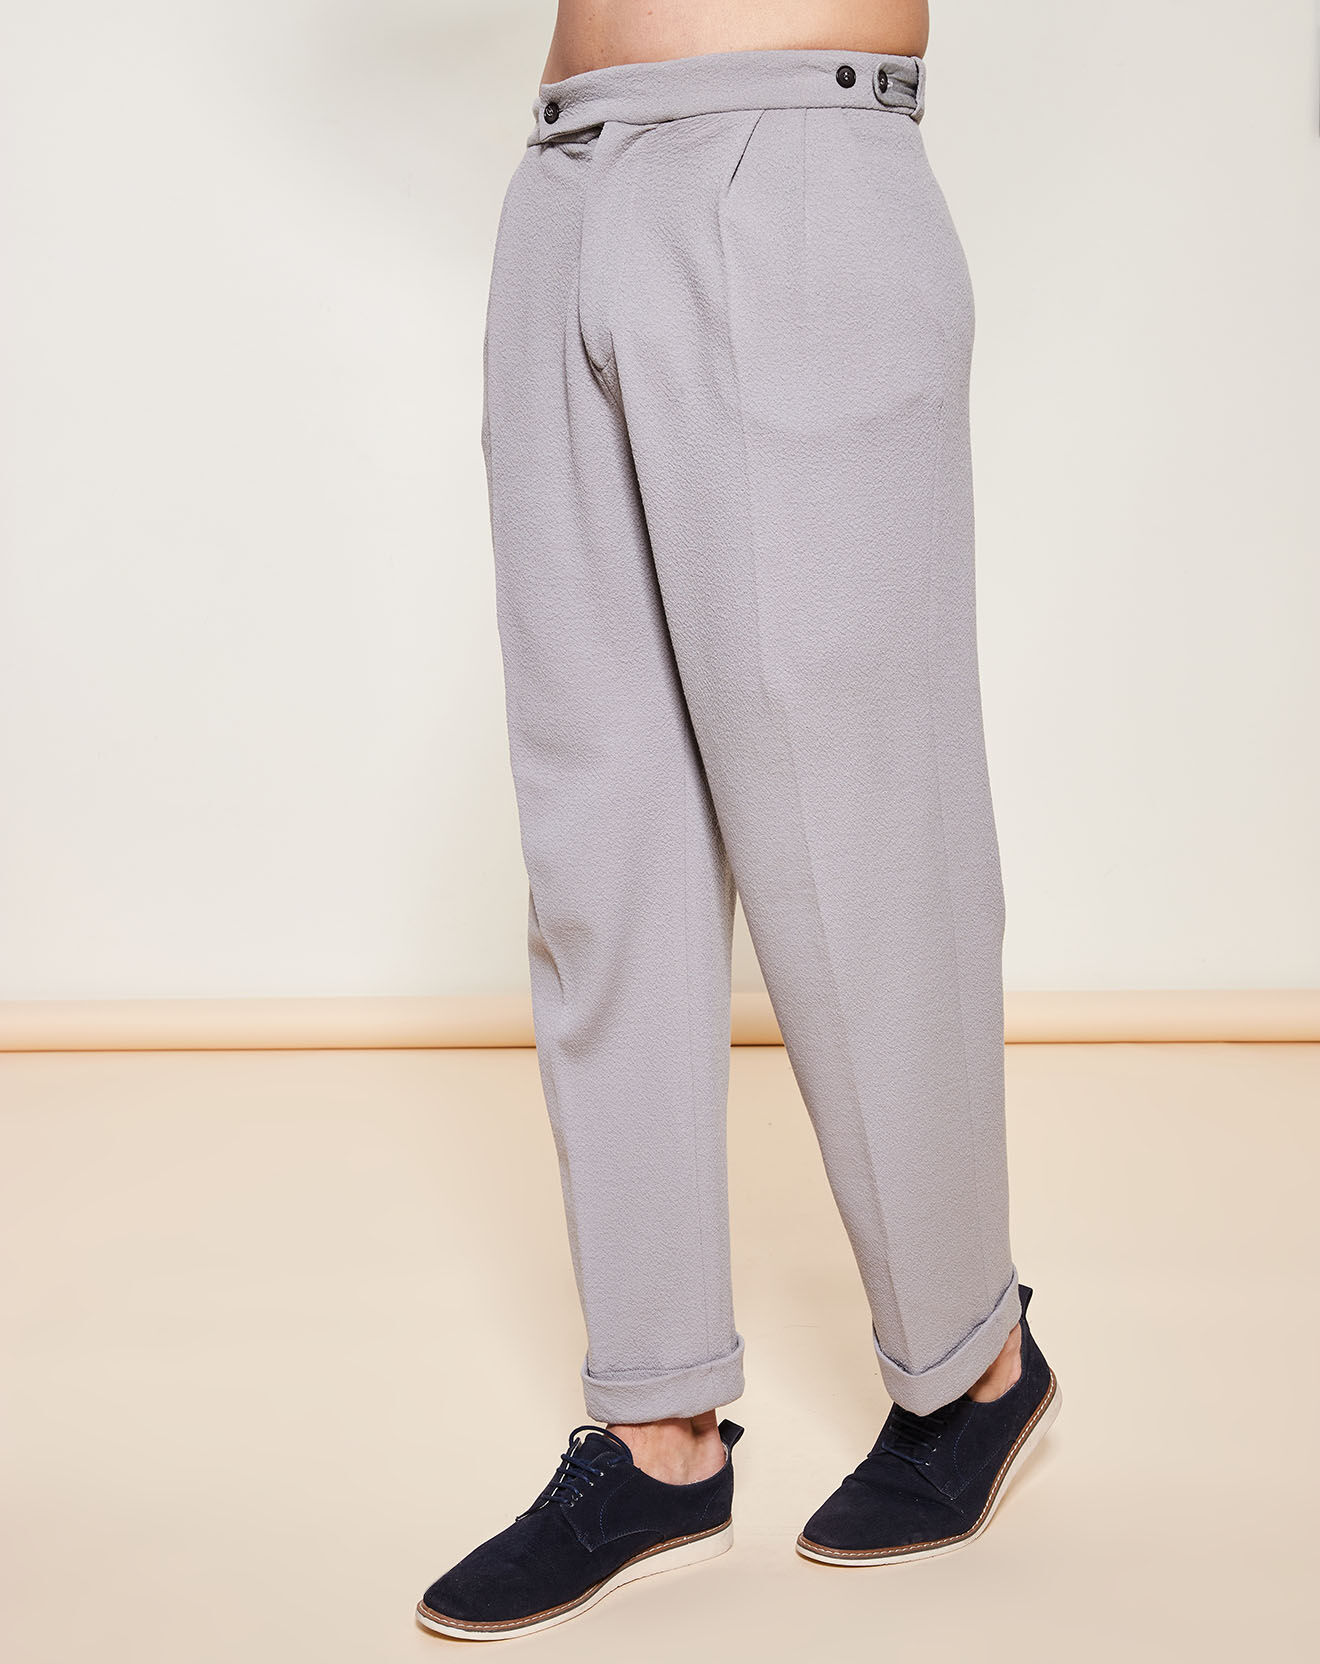 Pantalon style Casual 100% Laine vierge gris clair